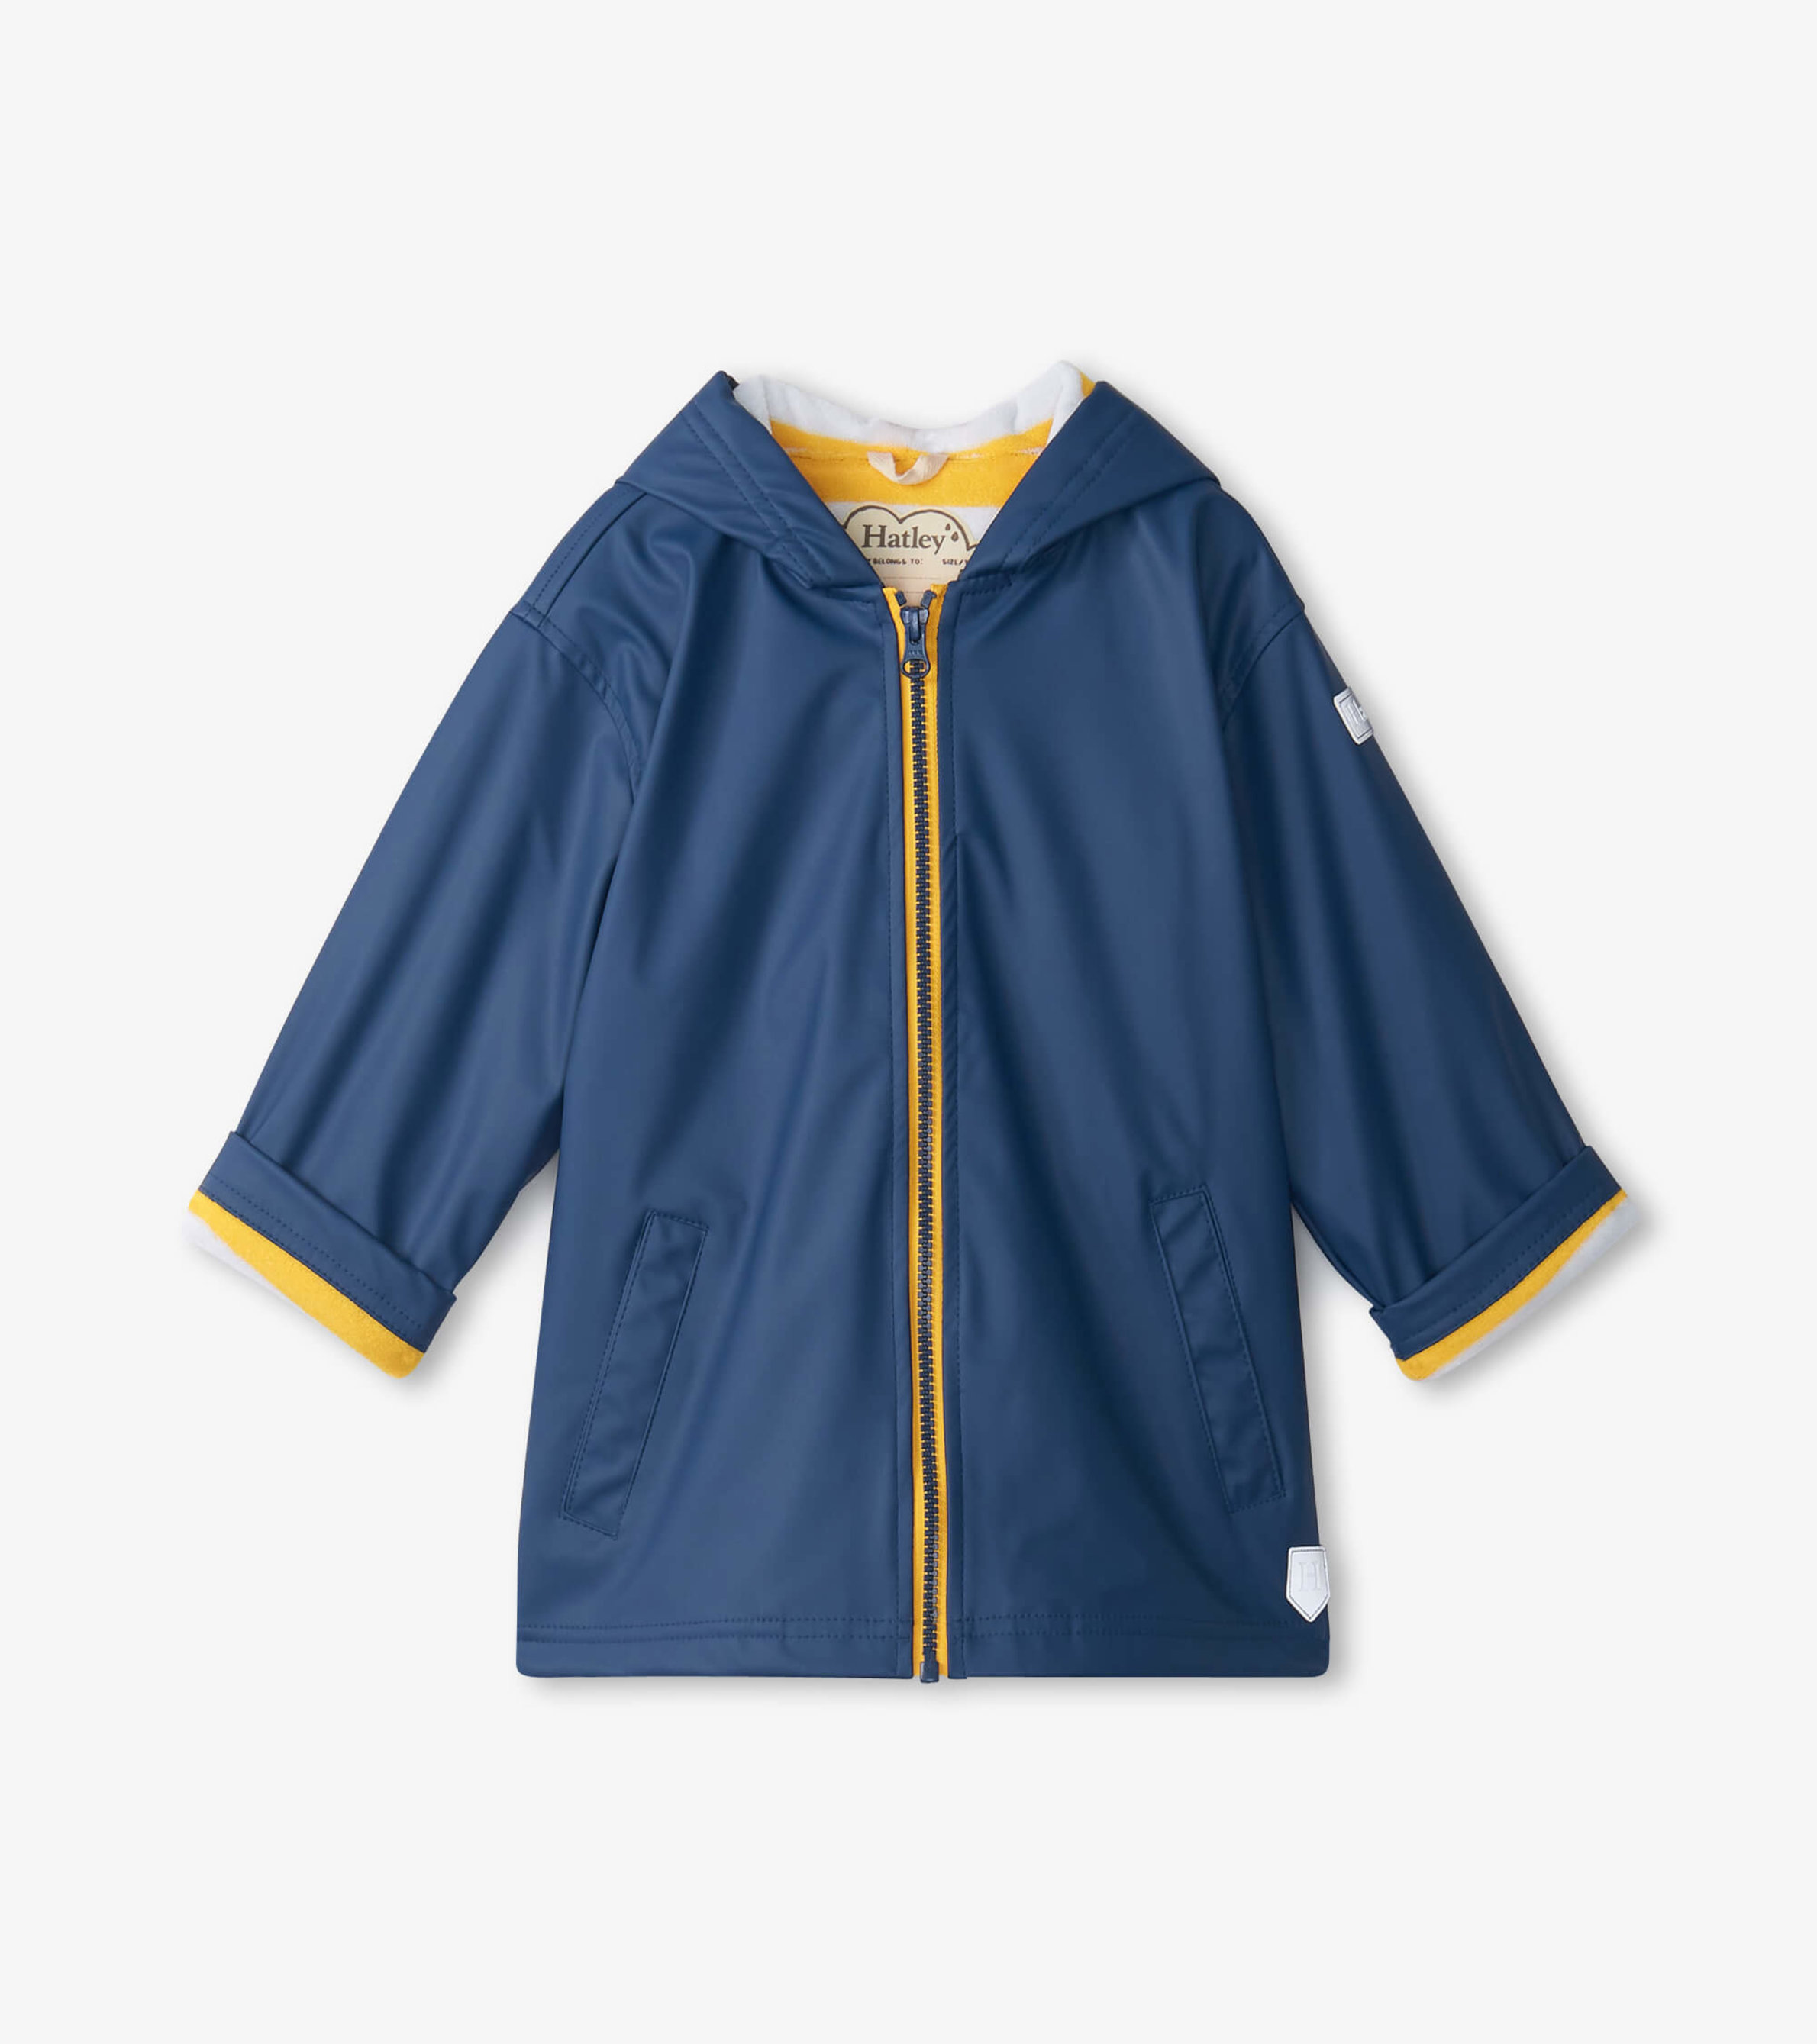 Hatley - Camden Linen jacket - Navy